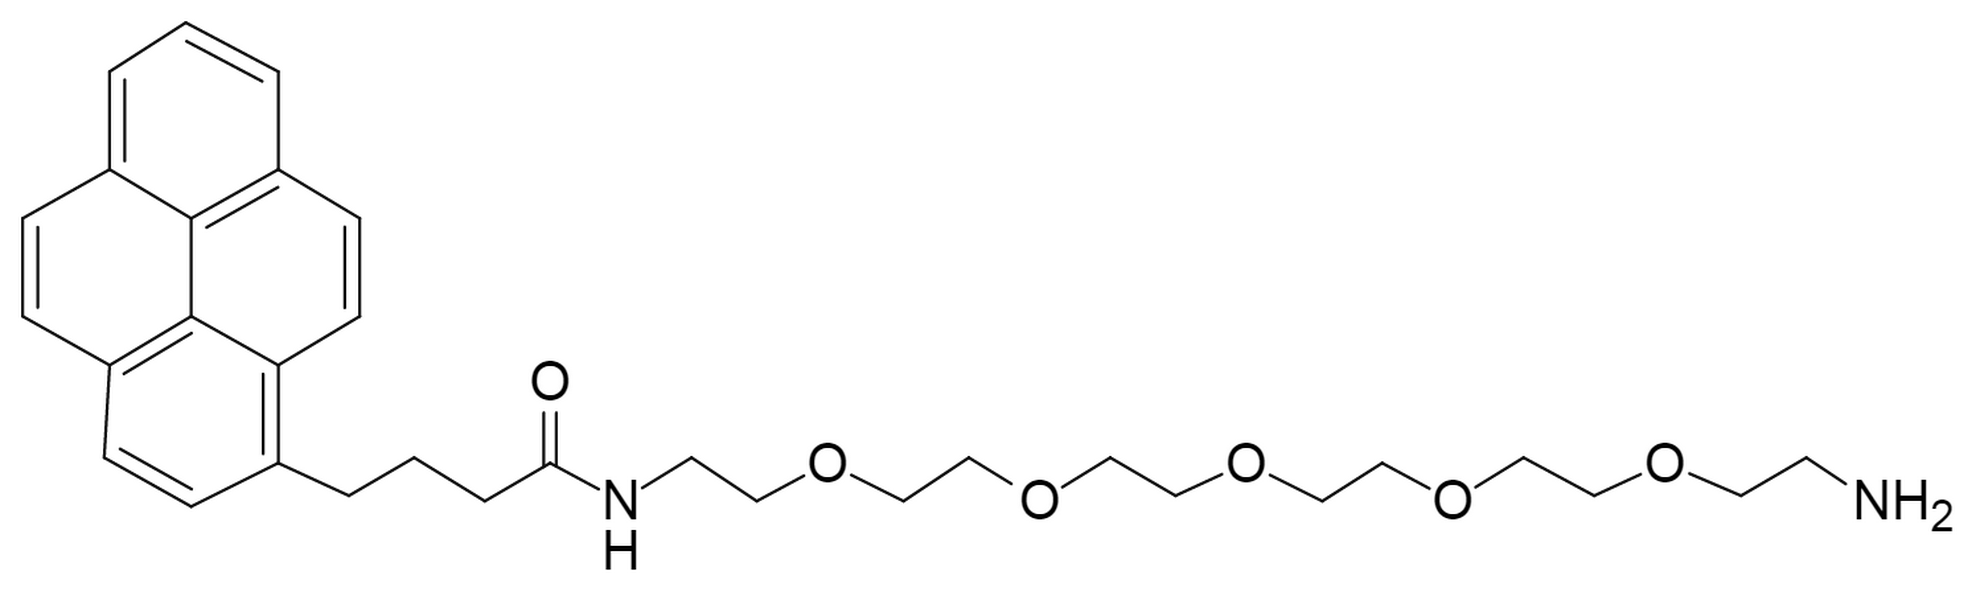 Pyrenebutyricamide-PEG5-amine, TFA salt